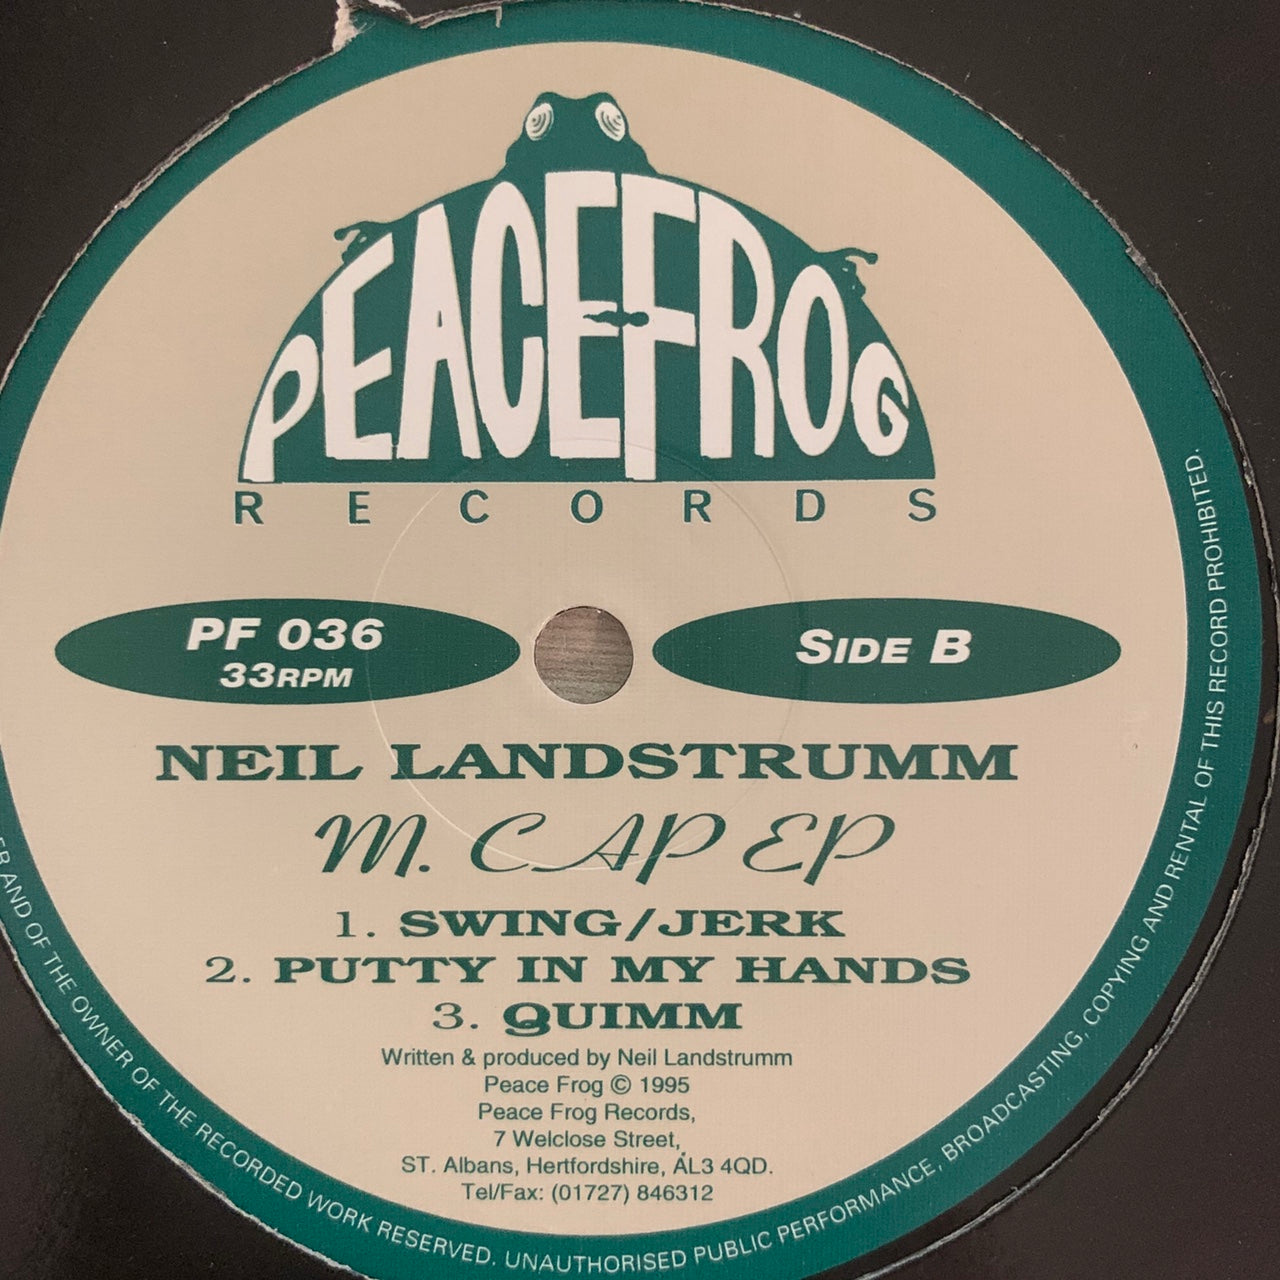 Neil Landstrumm M. Cap Ep “Ringbender” / “Groovepeel” 5 Track 12inch Vinyl